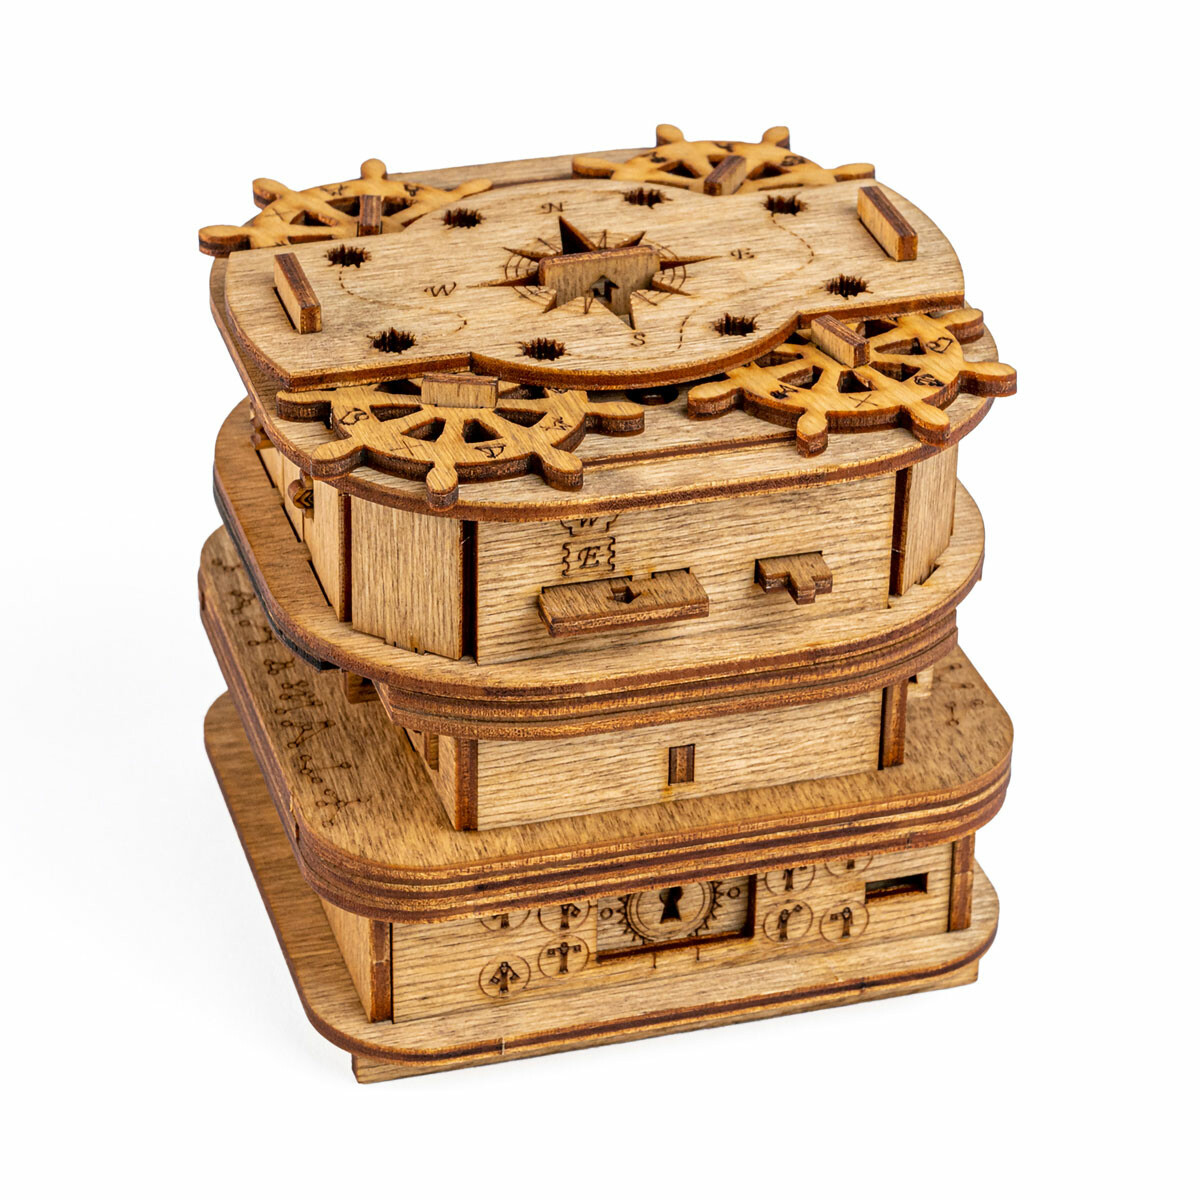 Cluebox | Escape Room in a Box - Davy Jones Locker, 39,99 €